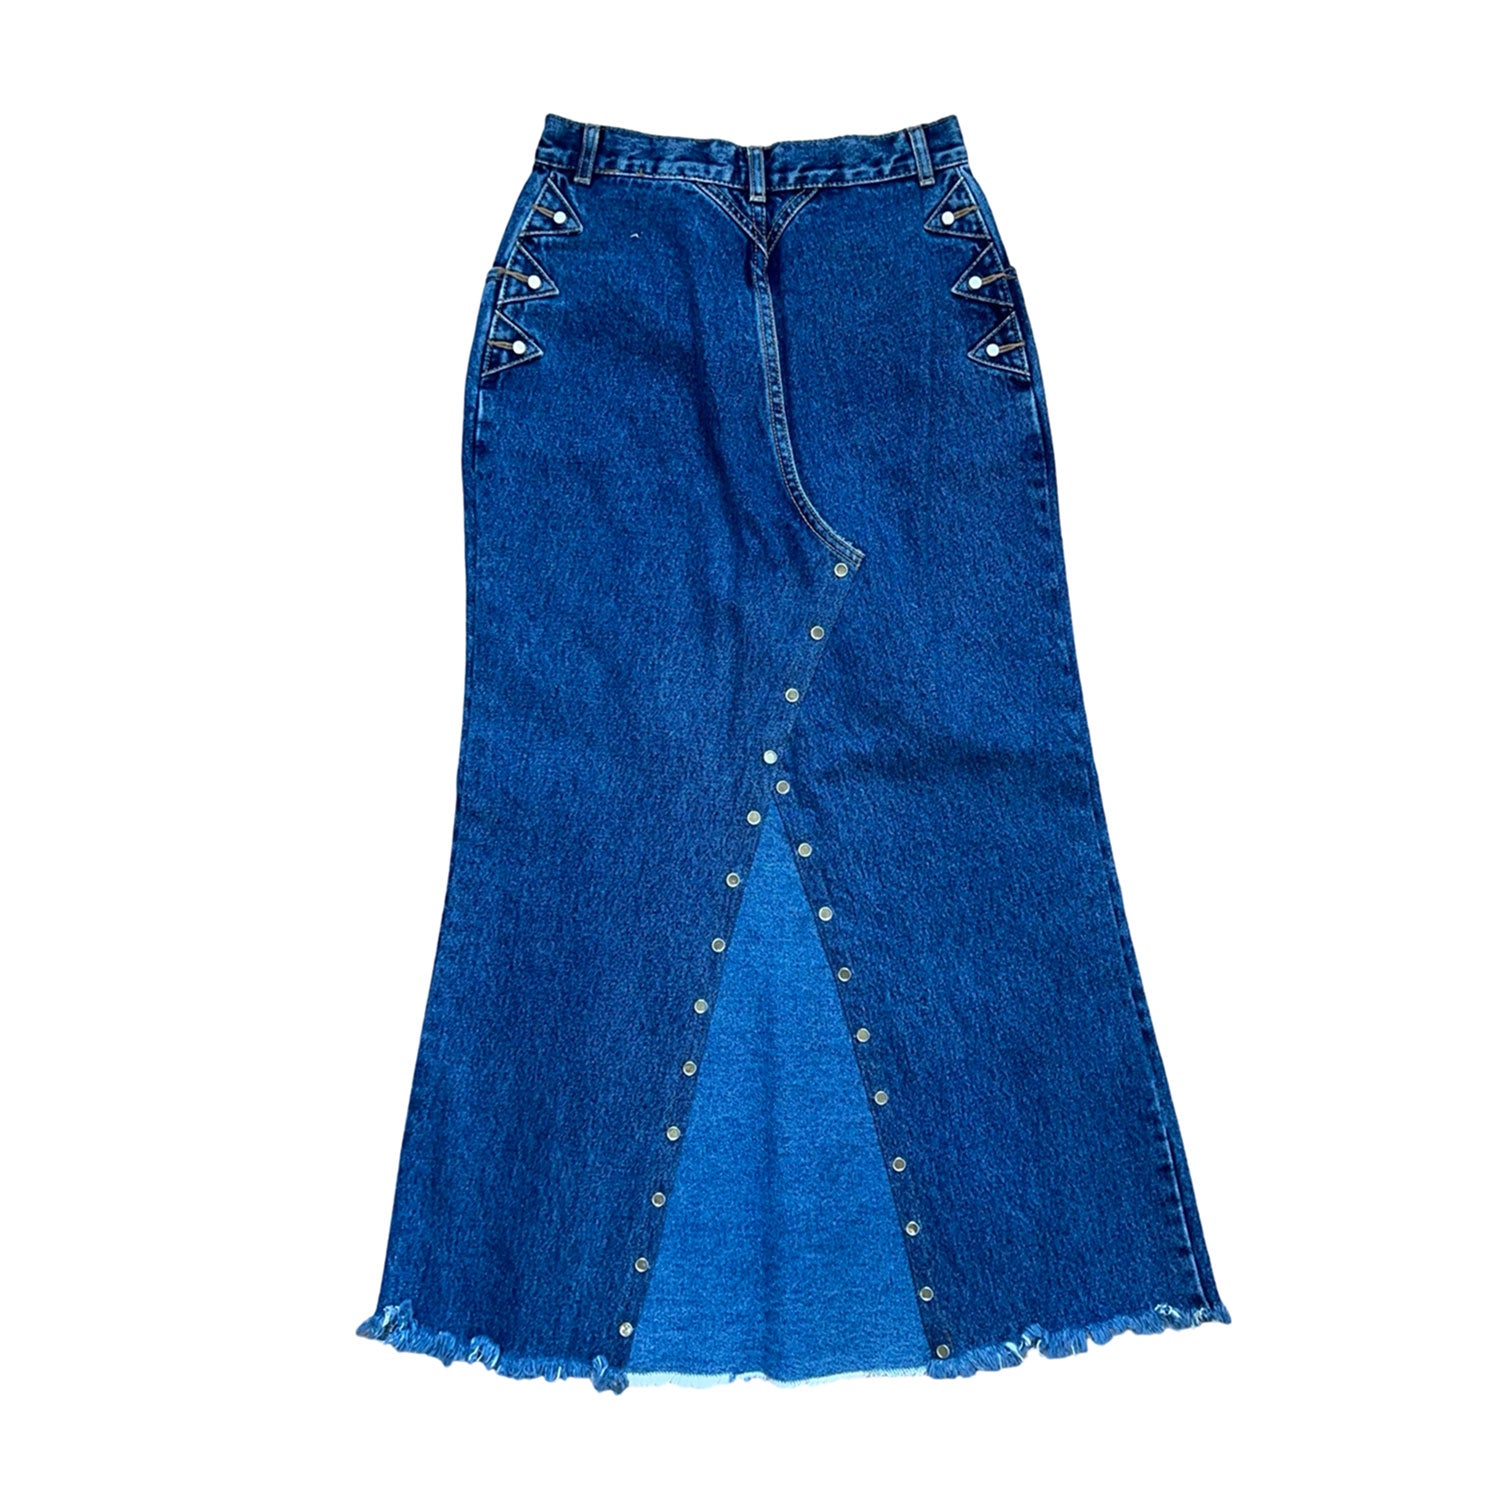 Two-Buttoned Blue Denim Skirt